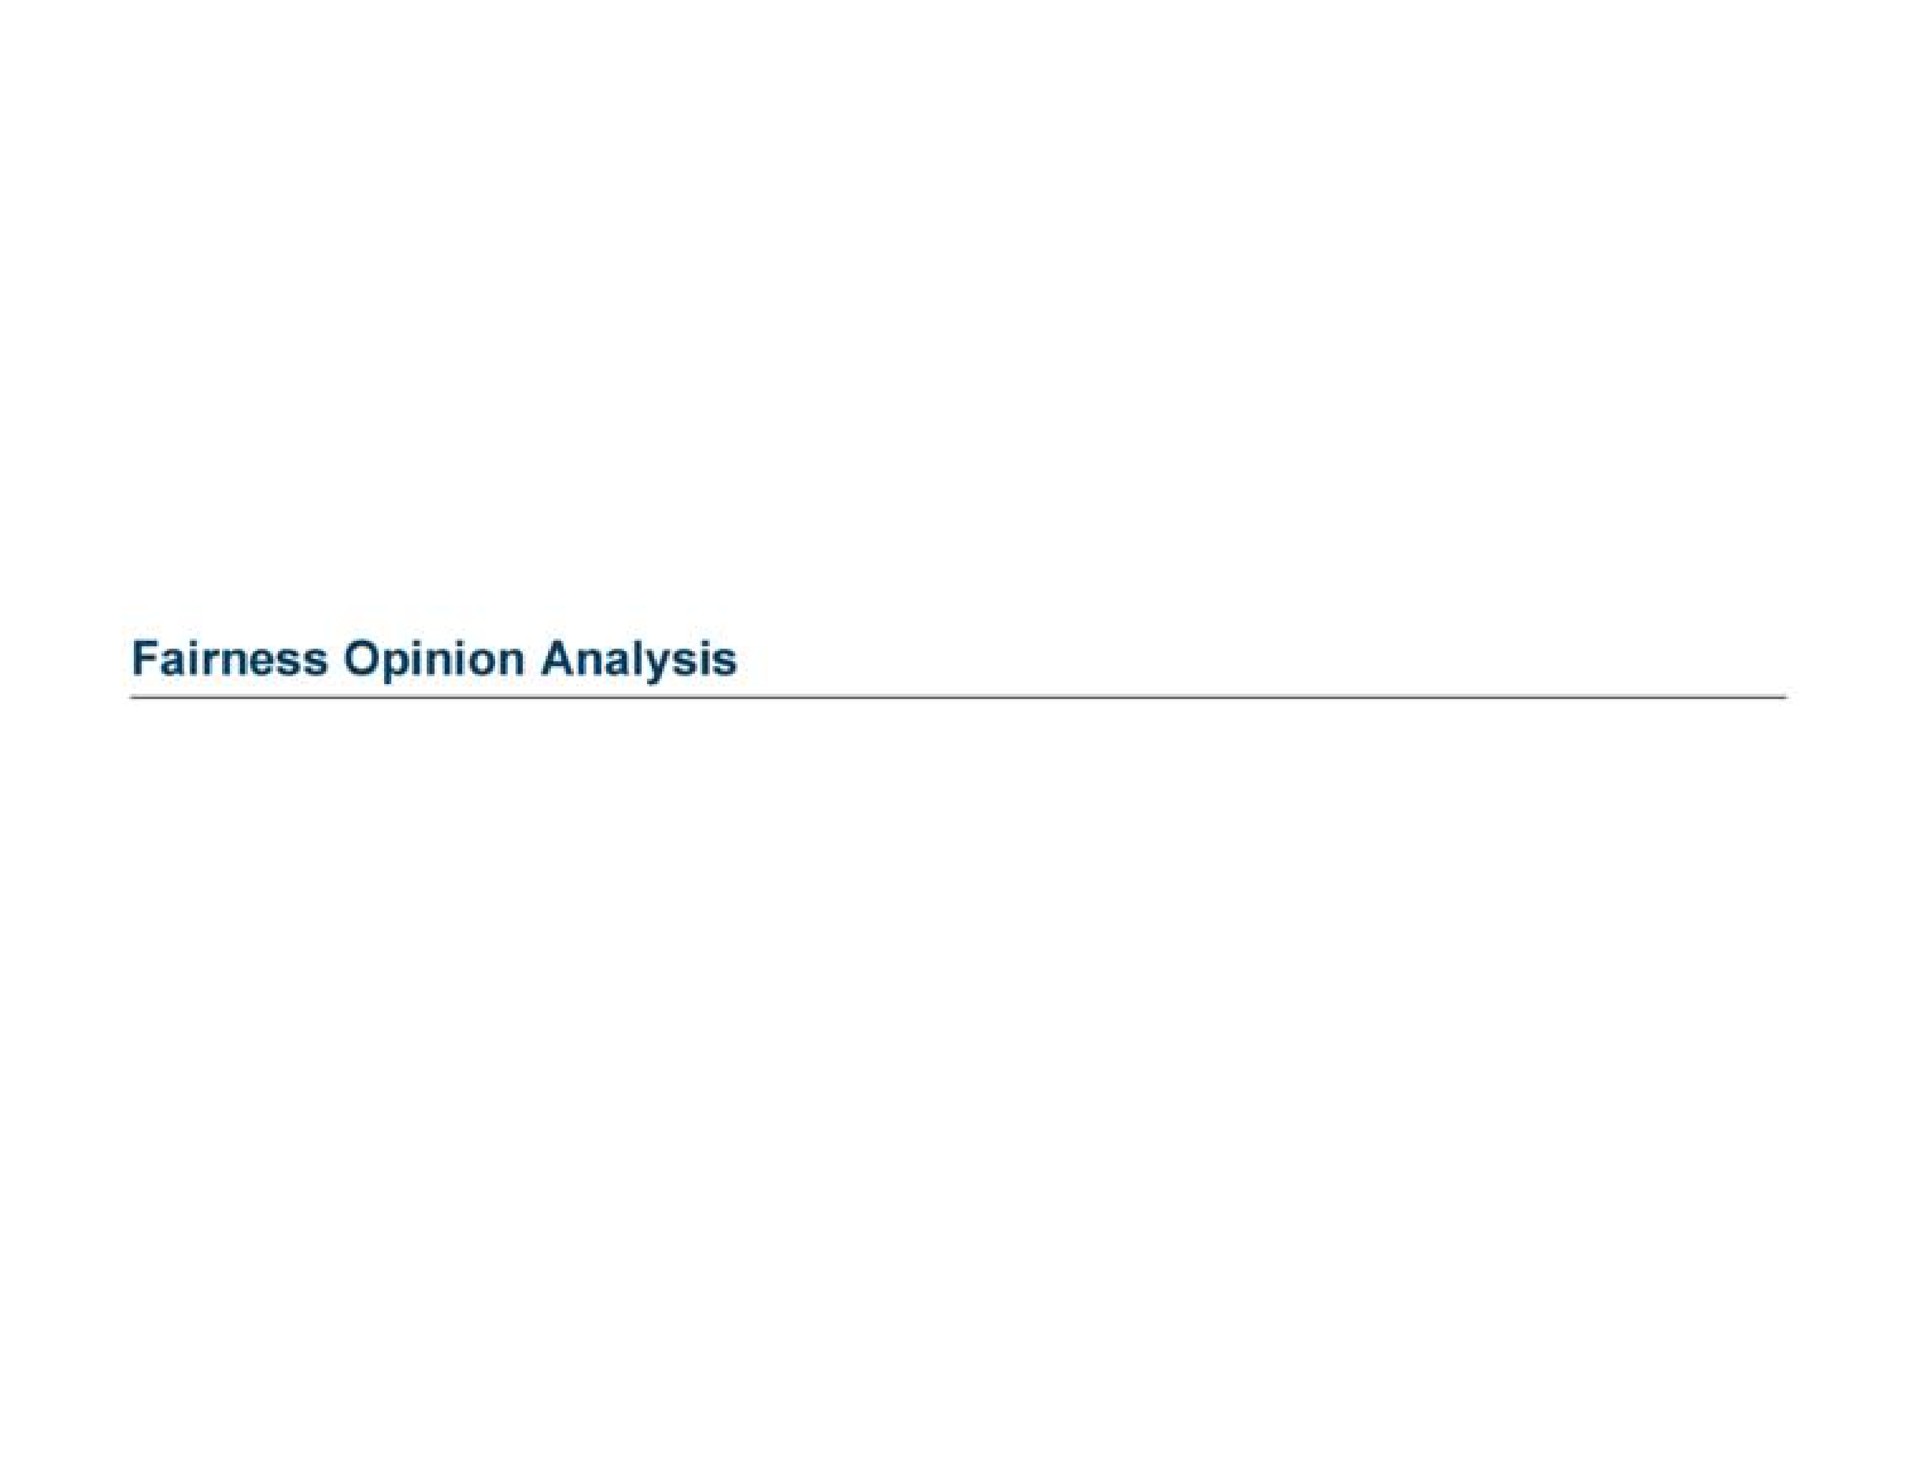 fairness opinion analysis | Barclays